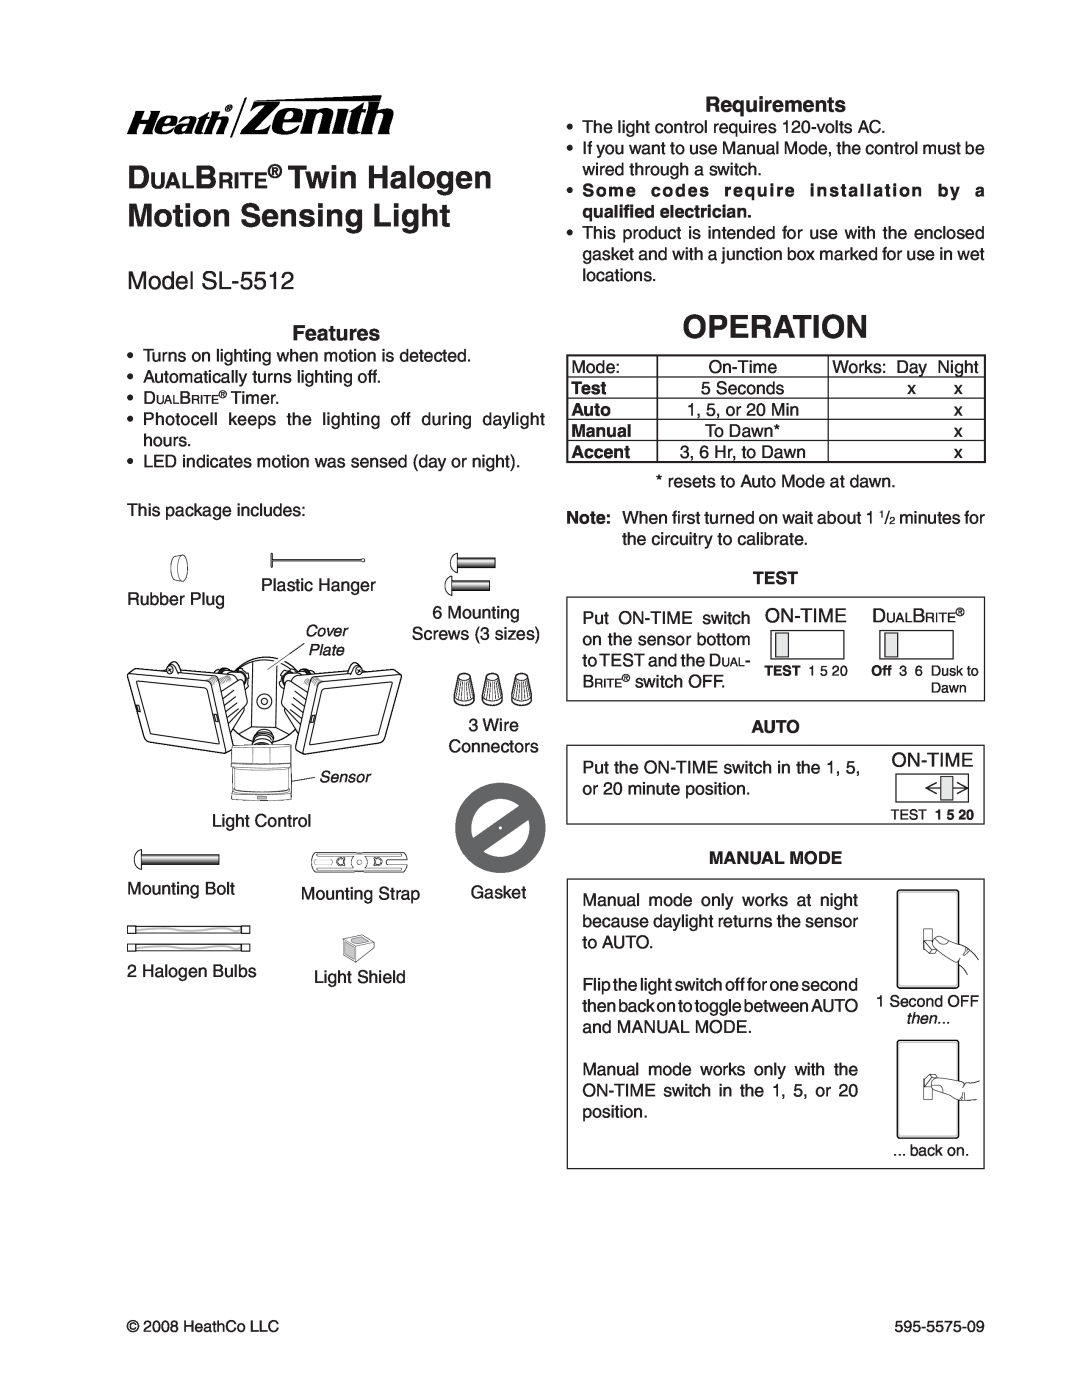 Heath Zenith manual DualBrite Twin Halogen Motion Sensing Light, Operation, Model SL-5512, Features, Requirements, Test 